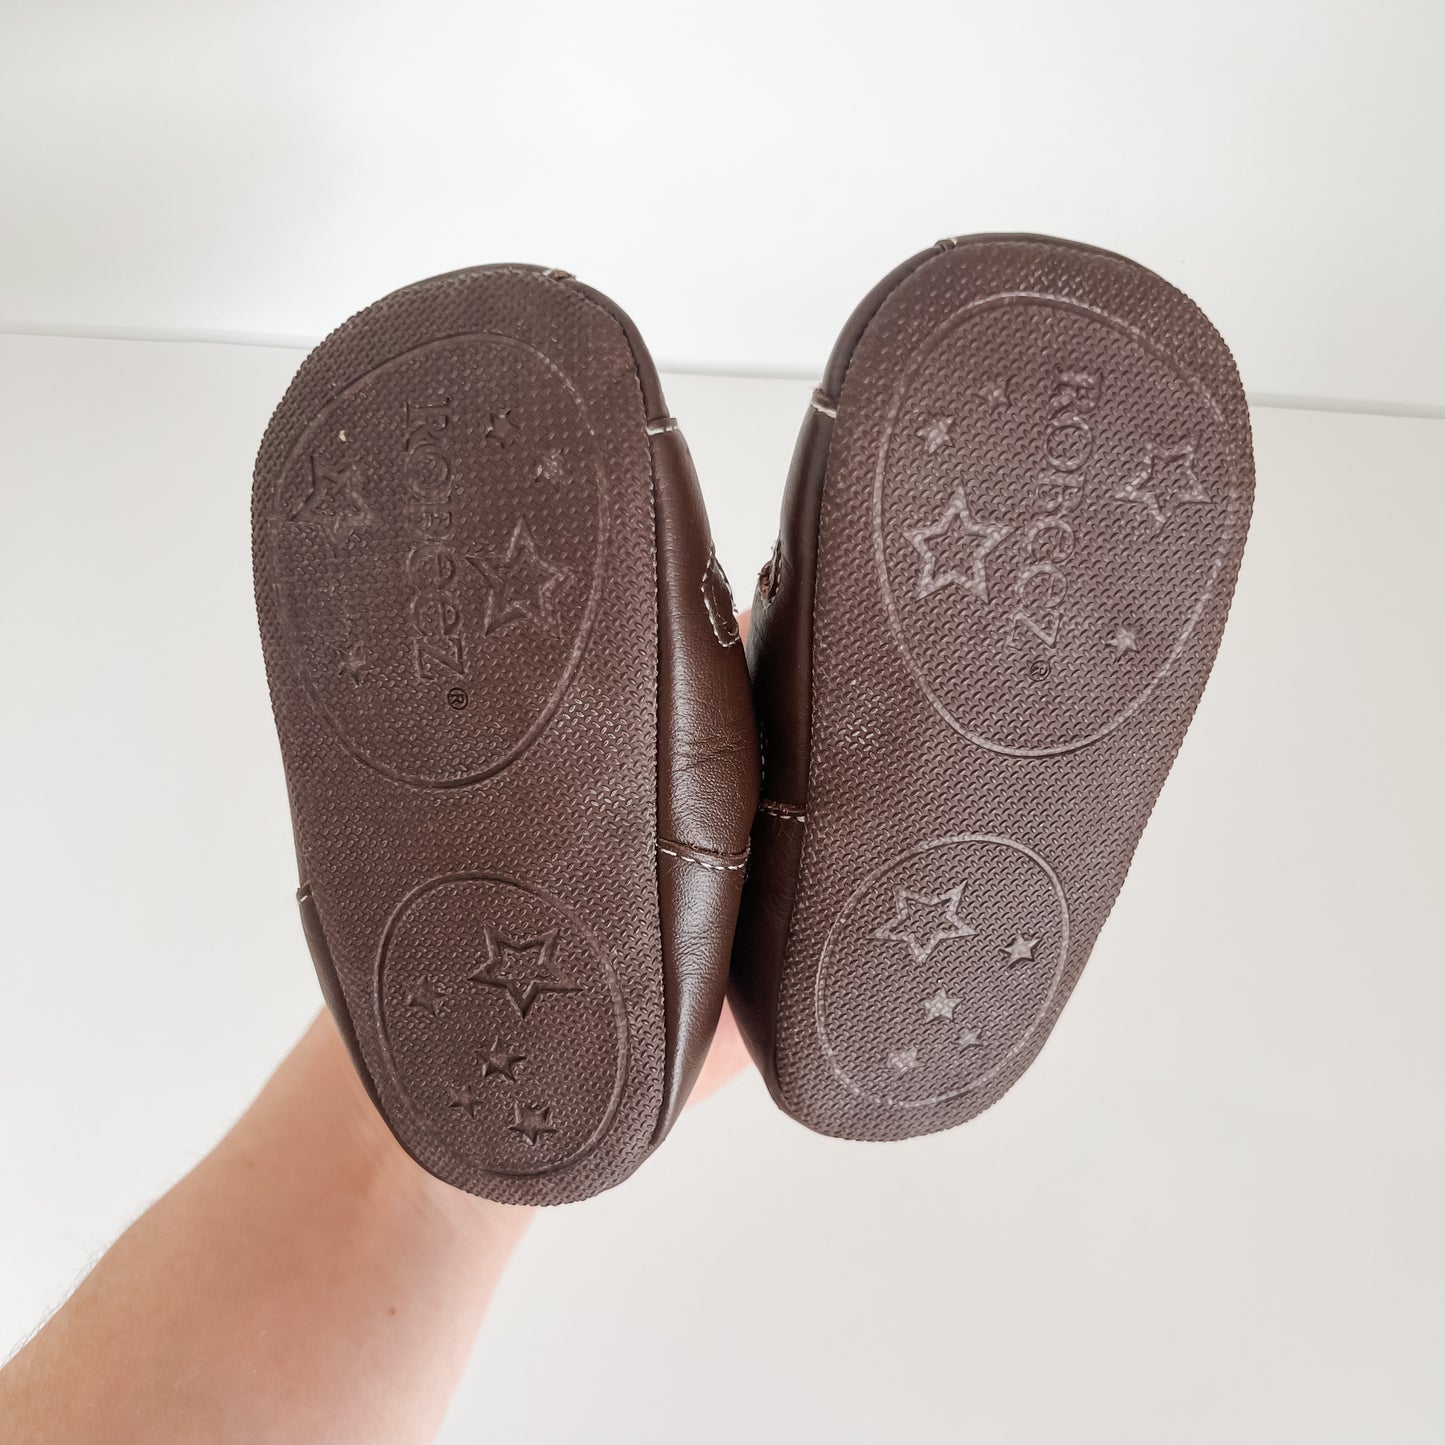 Robeez Leather Sandals (4)